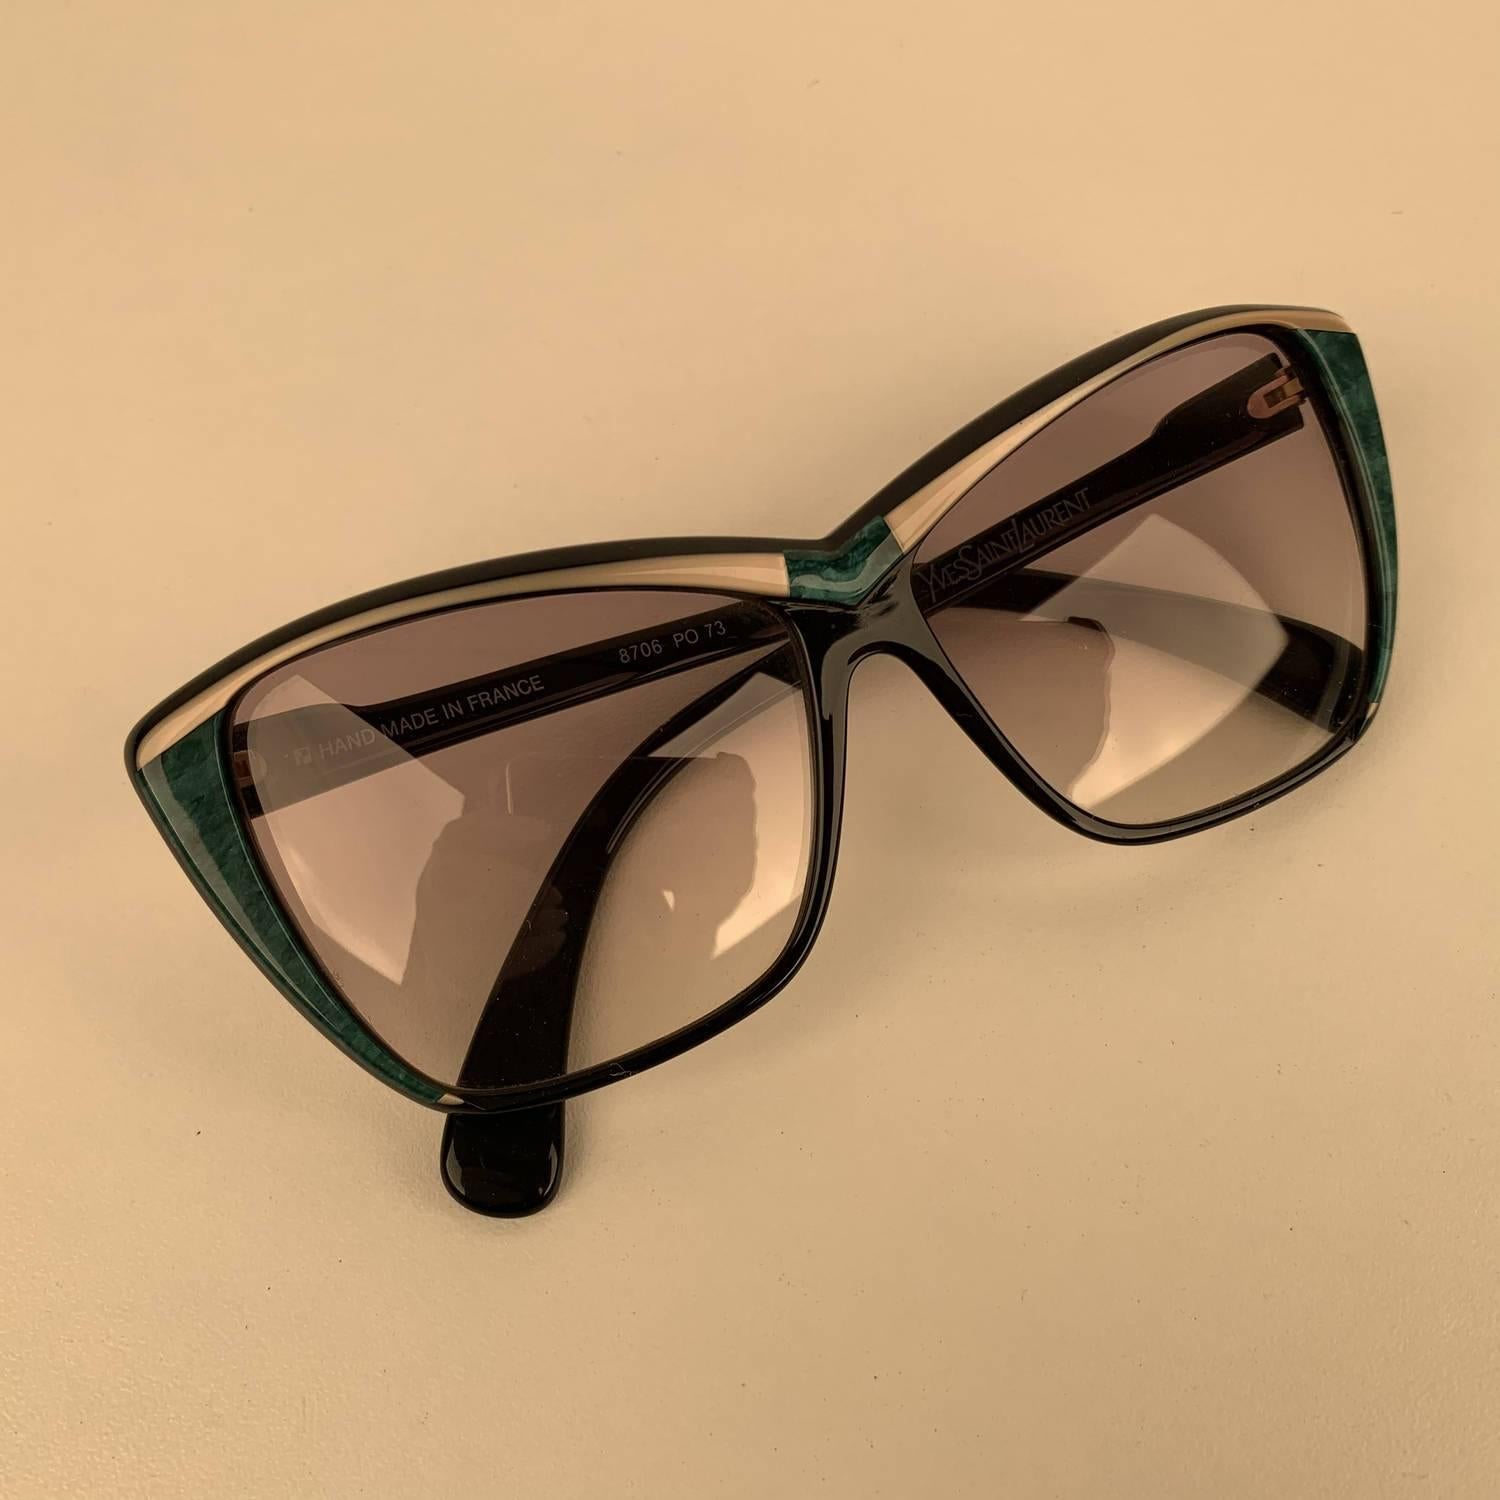 Yves Saint Laurent Vintage Black Green Sunglasses 8706 PO 73 1